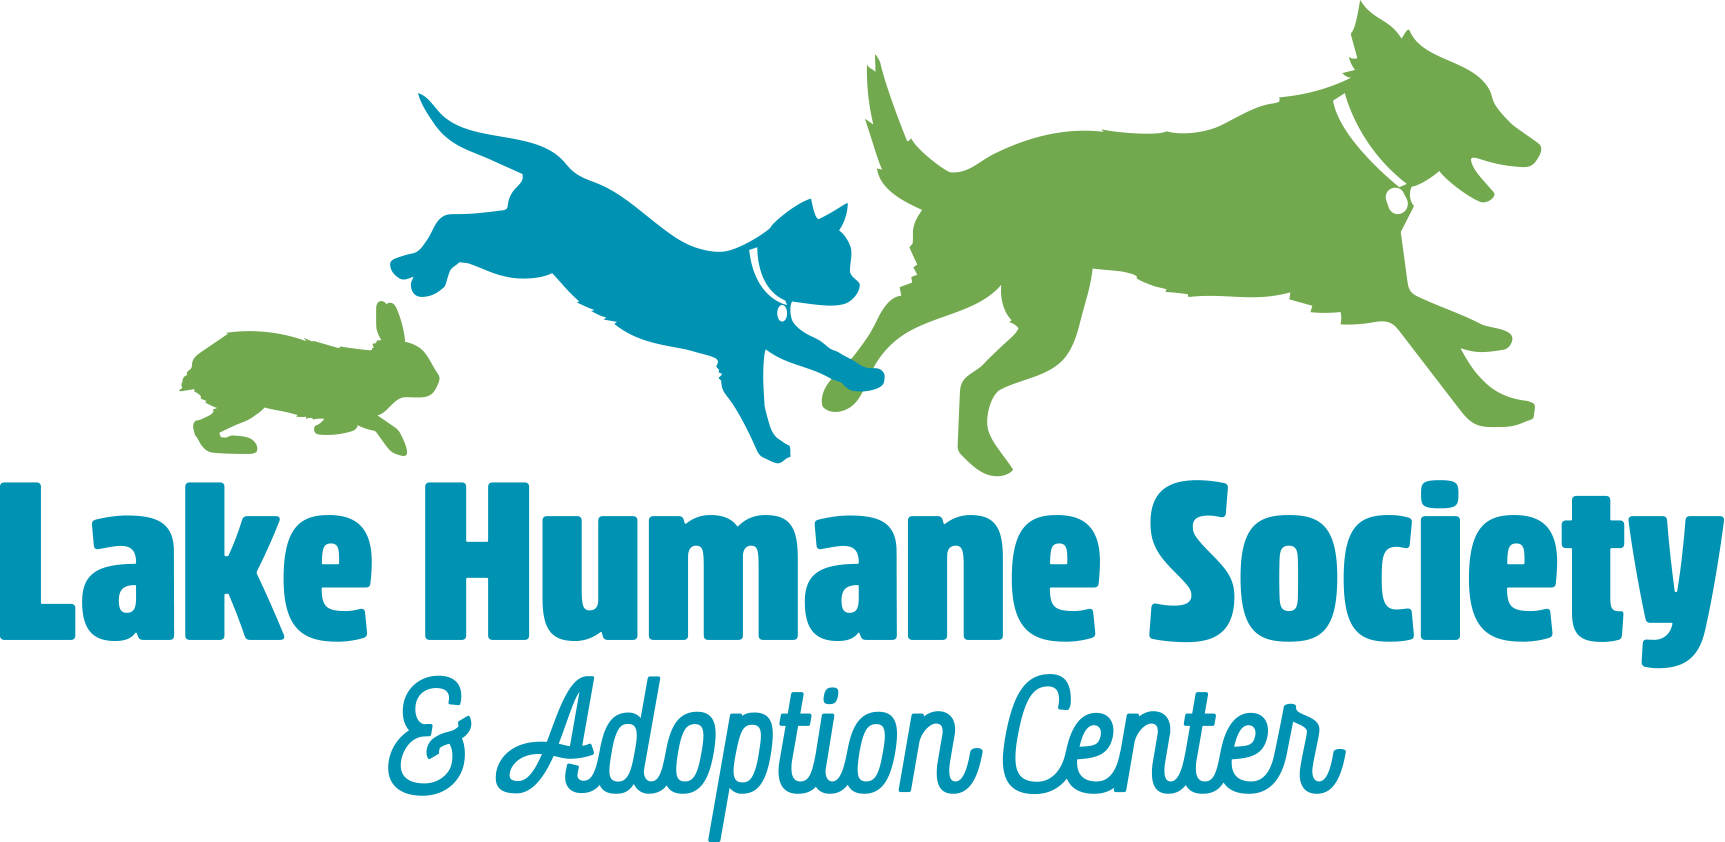 Human society. Humane Society. Greenville Humane Society план. Bullitt County Humane Society. Humane Society Chillicothe Ohio.